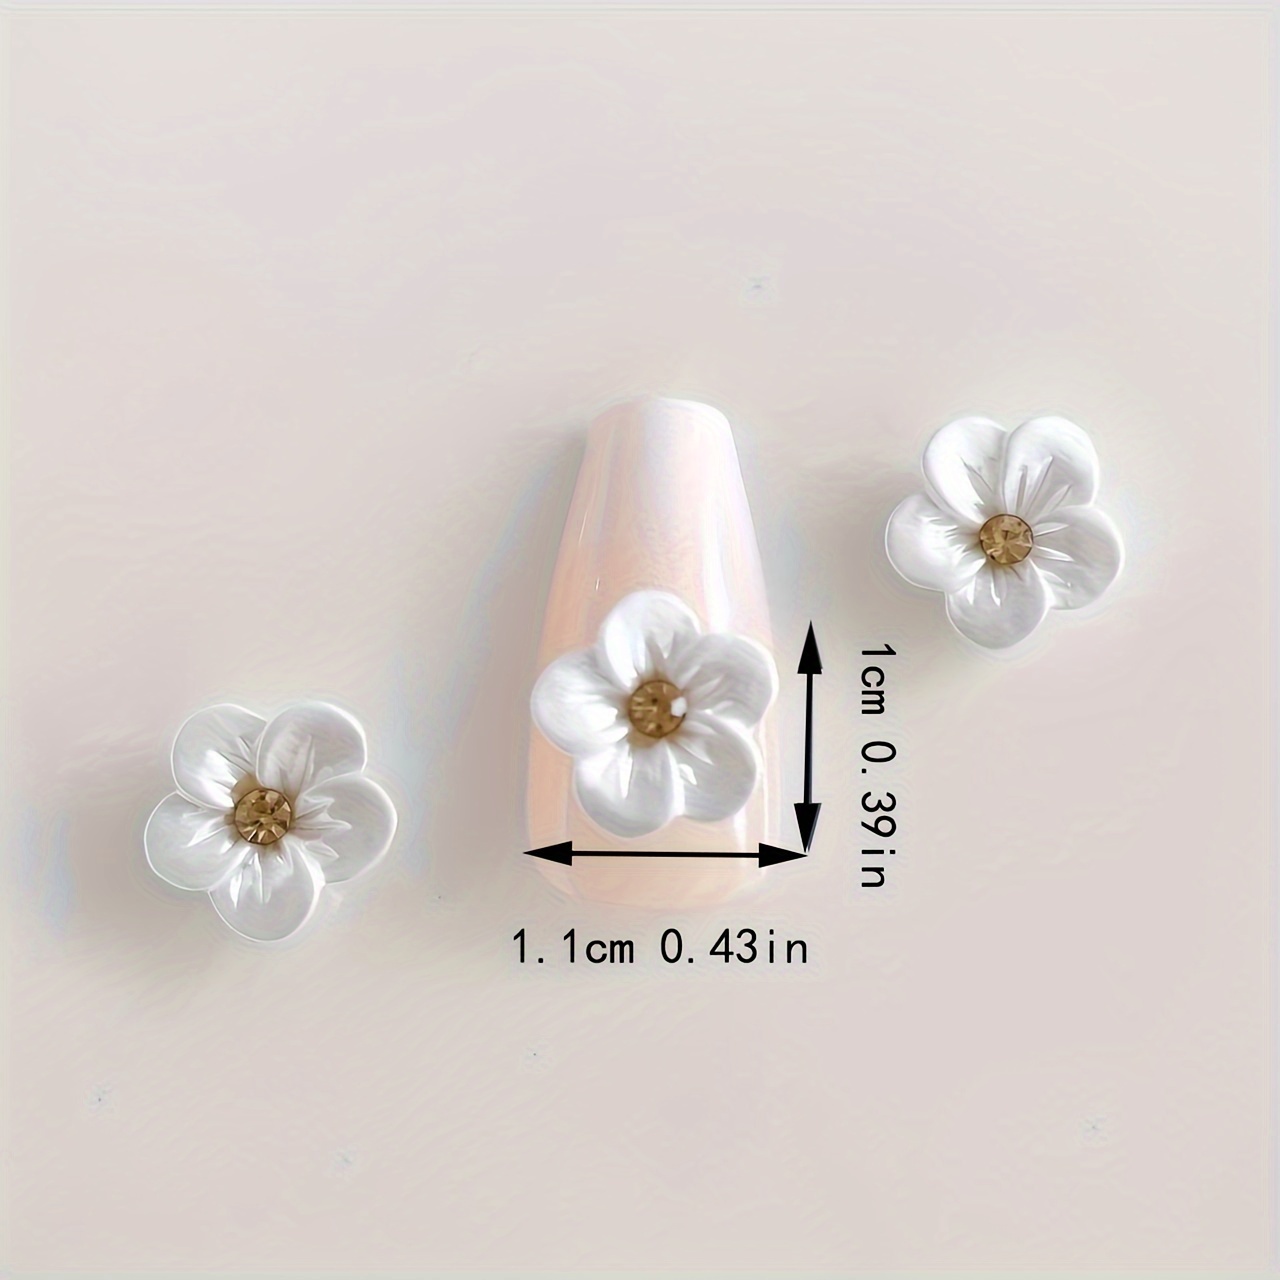 Black Friday 10pcs 3D Nail Charms Flower Nail Art Charms